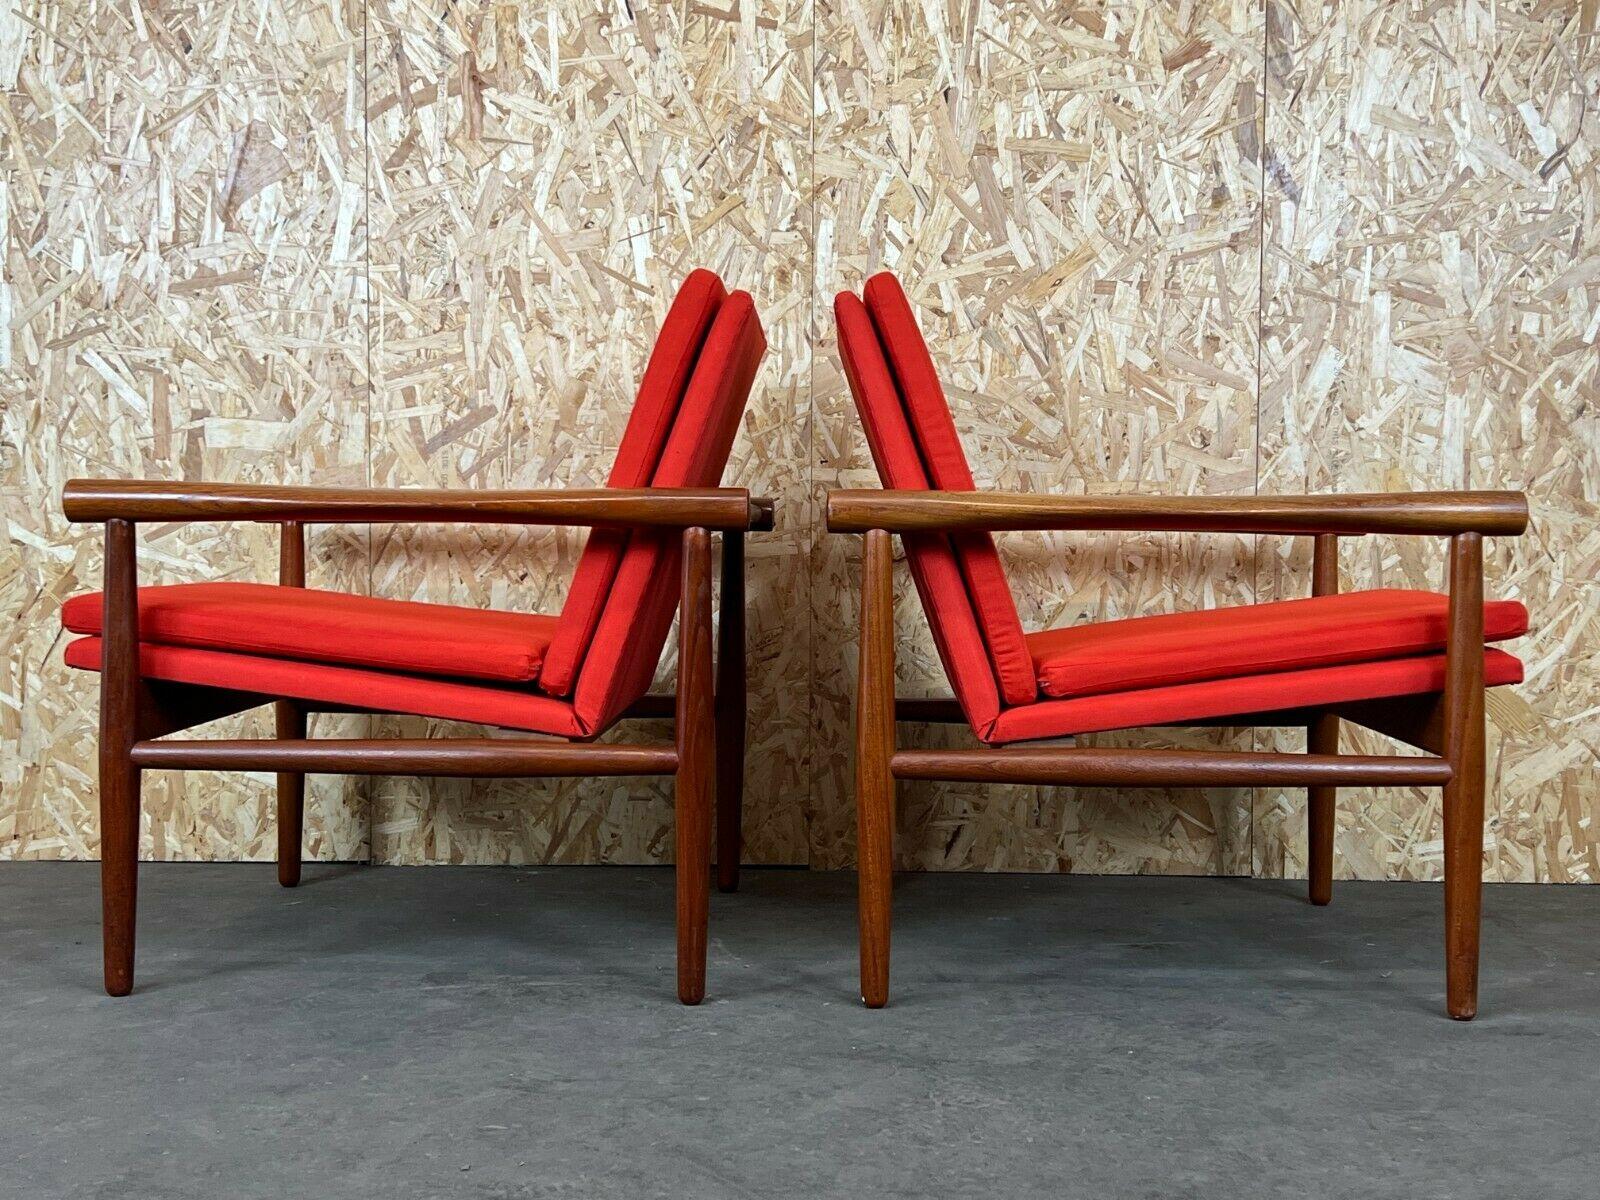 2x 60s 70s Easy Chair Kai Lyngfeld Larsen for Søborg Møbler Danish 60s

Object: 2x Easy Chair

Manufacturer: Søborg Møbler

Condition: good

Age: around 1960-1970

Dimensions:

70.5cm x 73cm x 76cm
Seat height = 42cm

Other